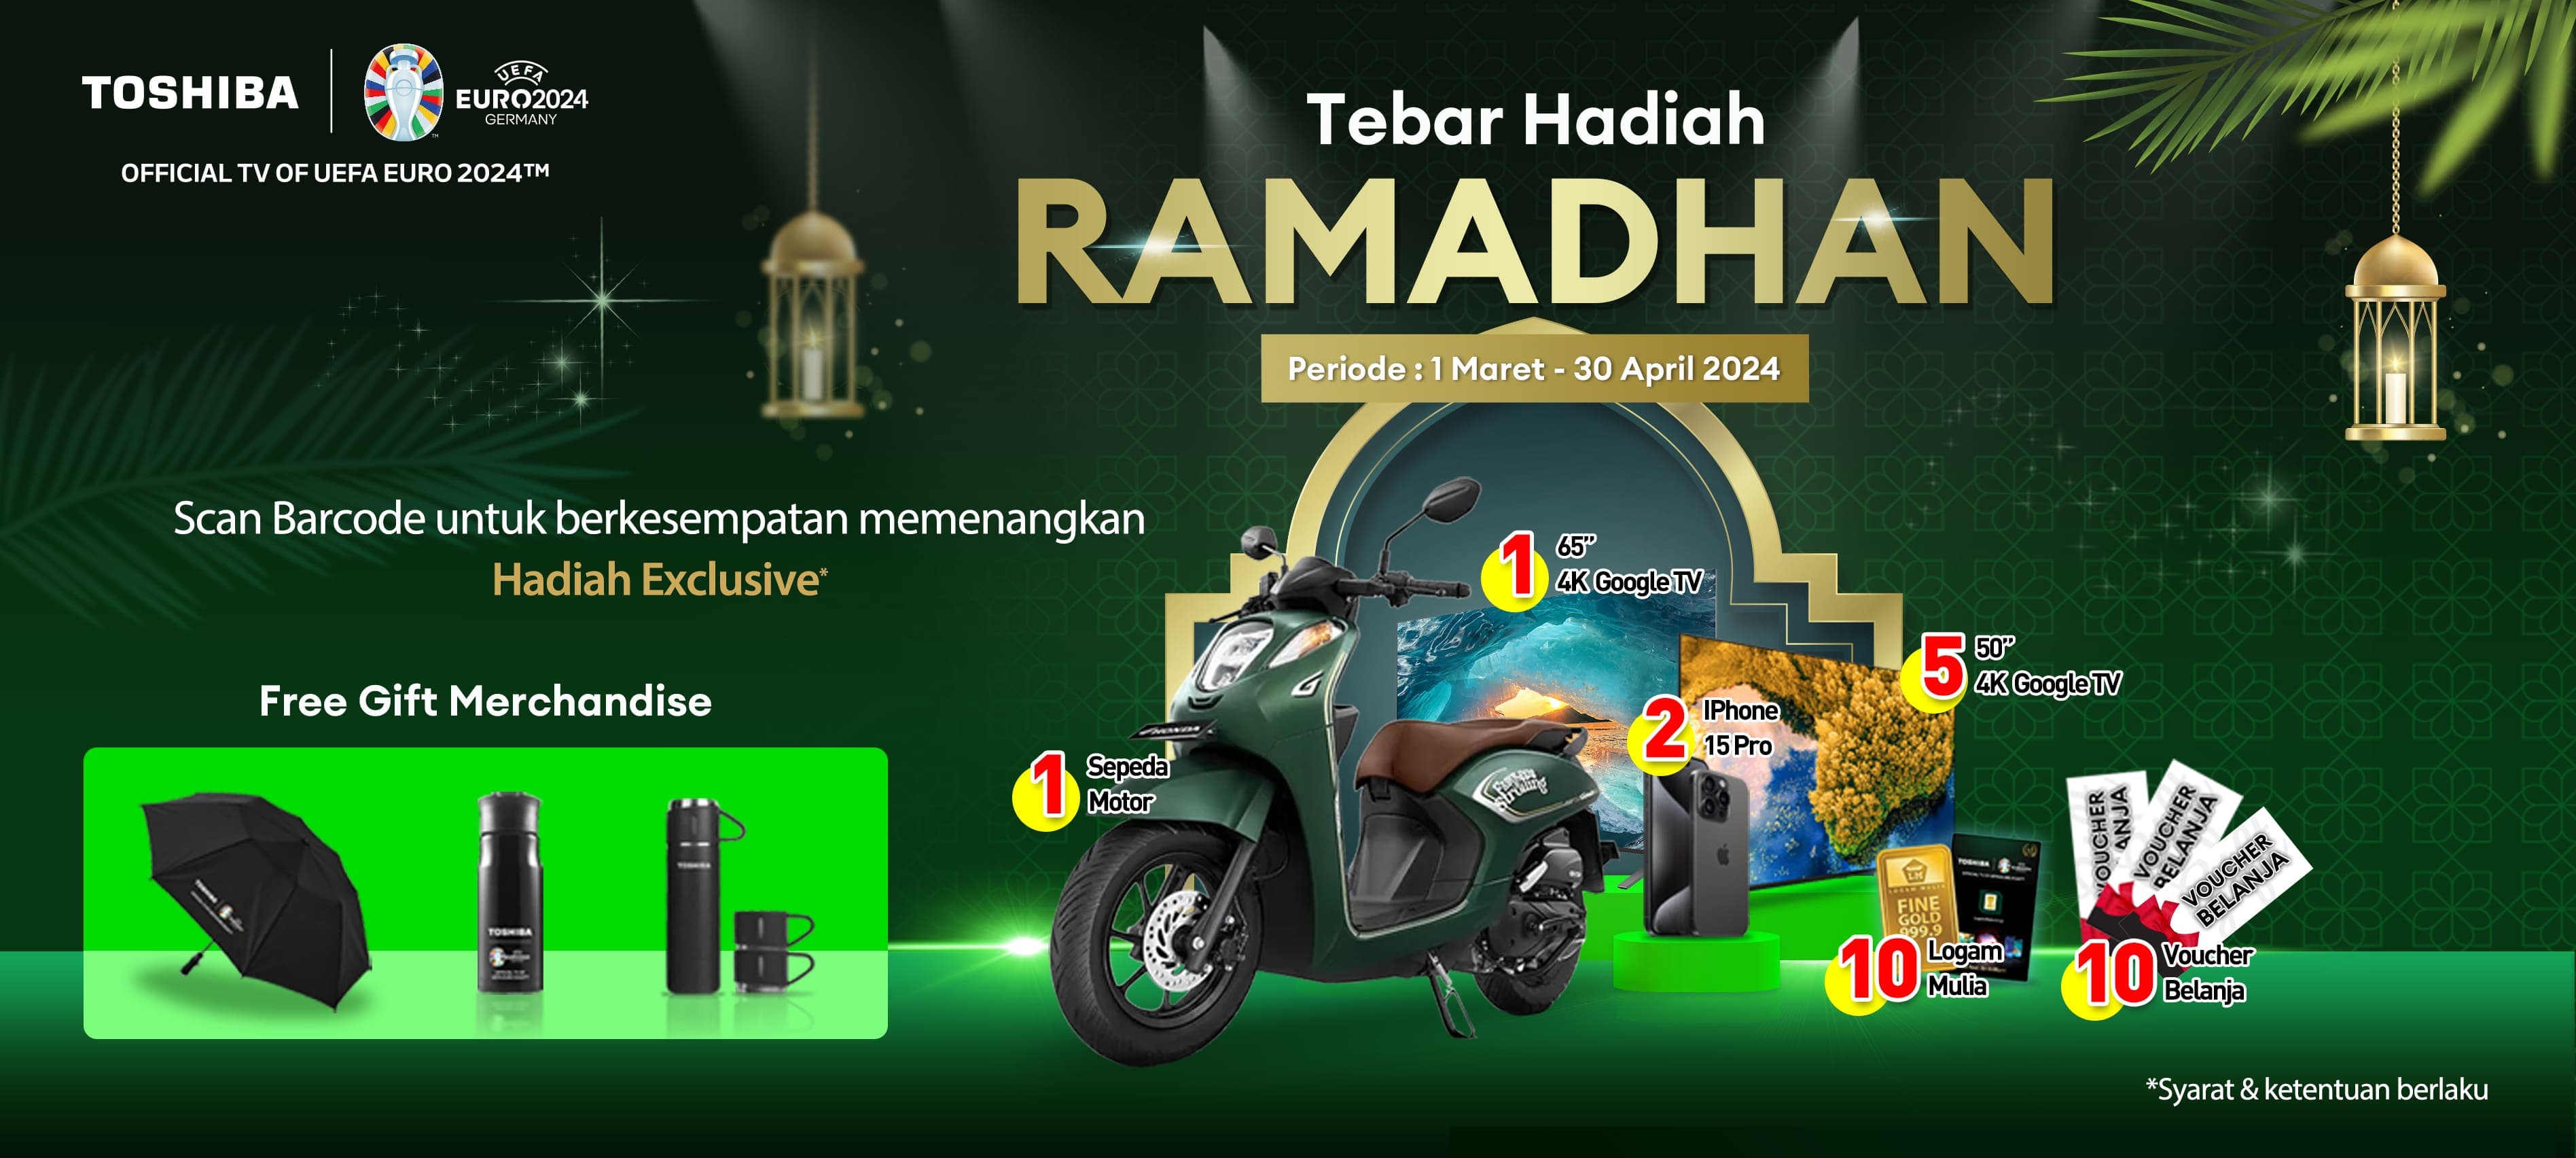 toshiba tv,toshiba tv indonesia,promo toshiba tv,promo ramadhan